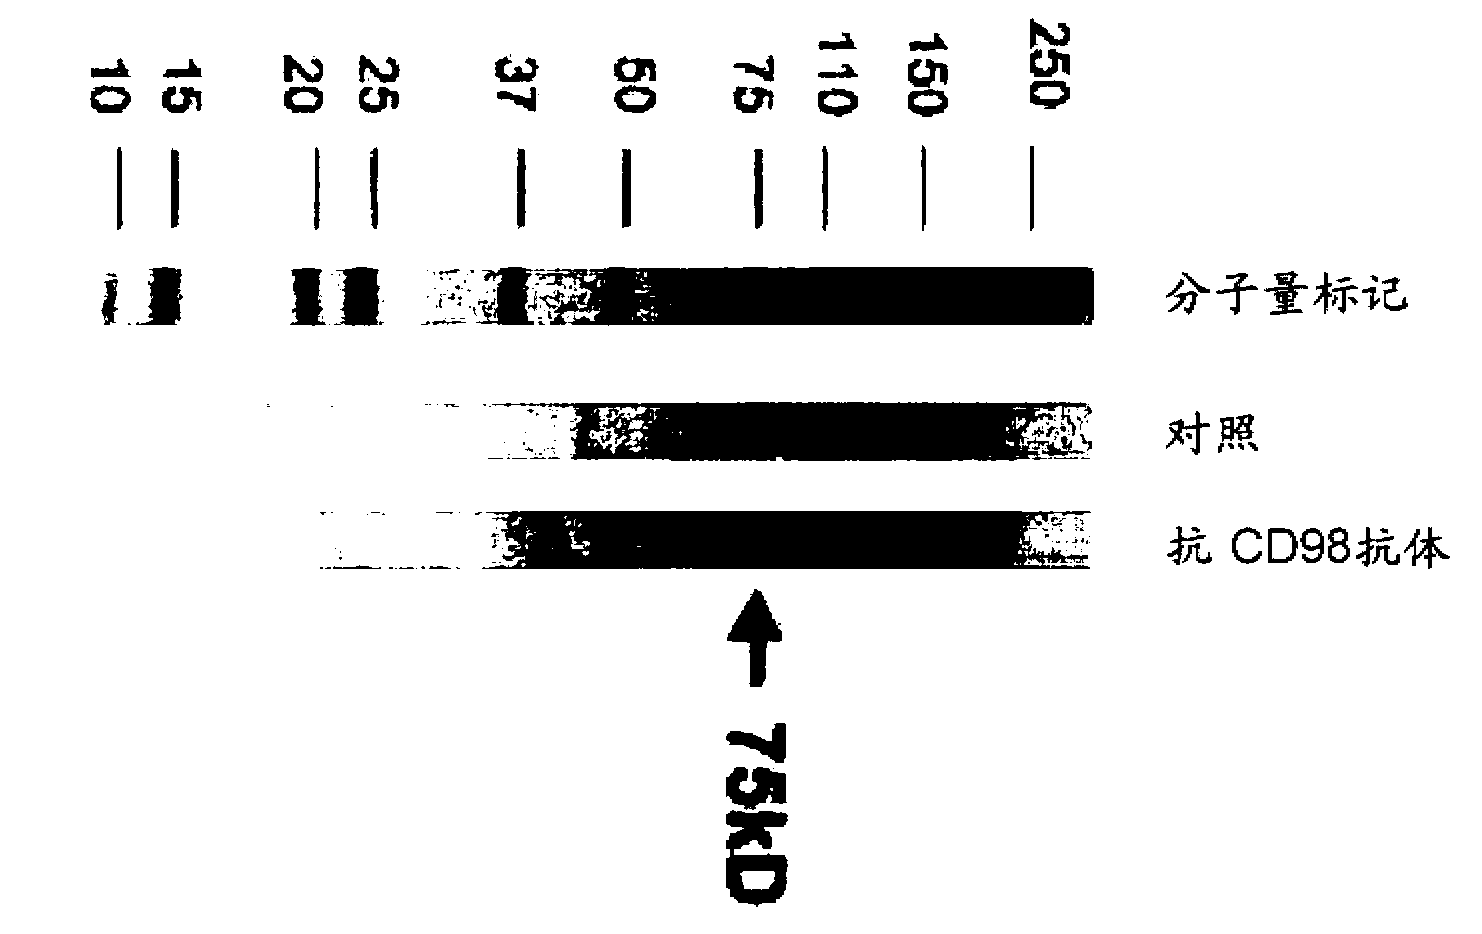 Novel anti-CD98 antibody and use thereof